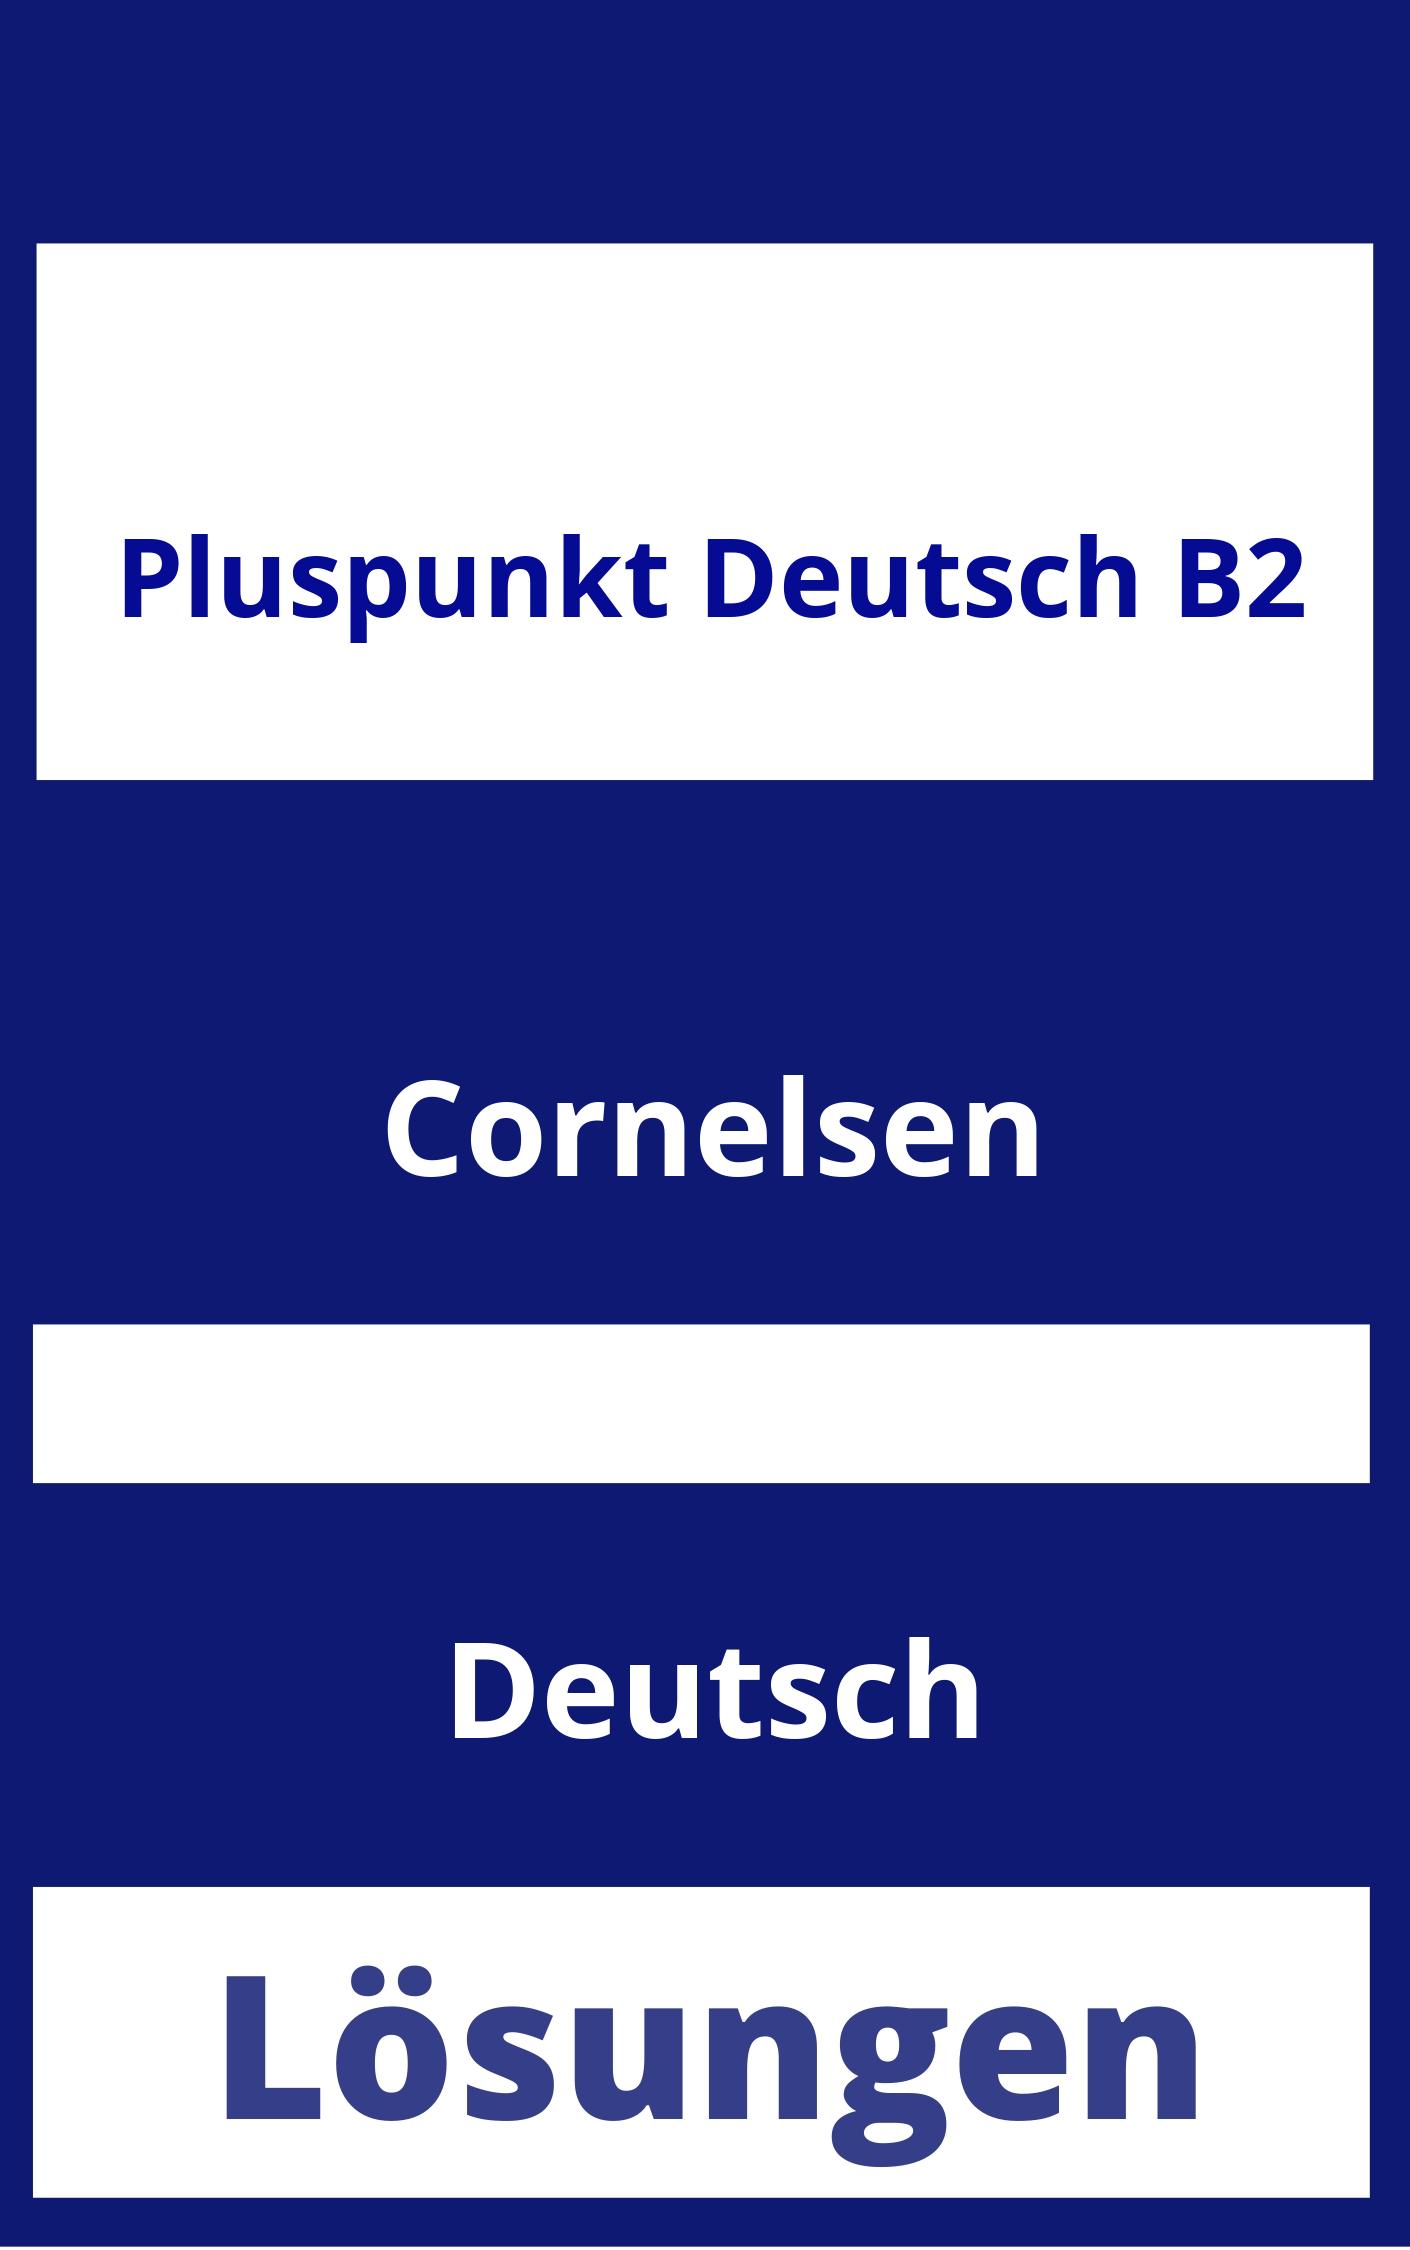 Pluspunkt Deutsch B2